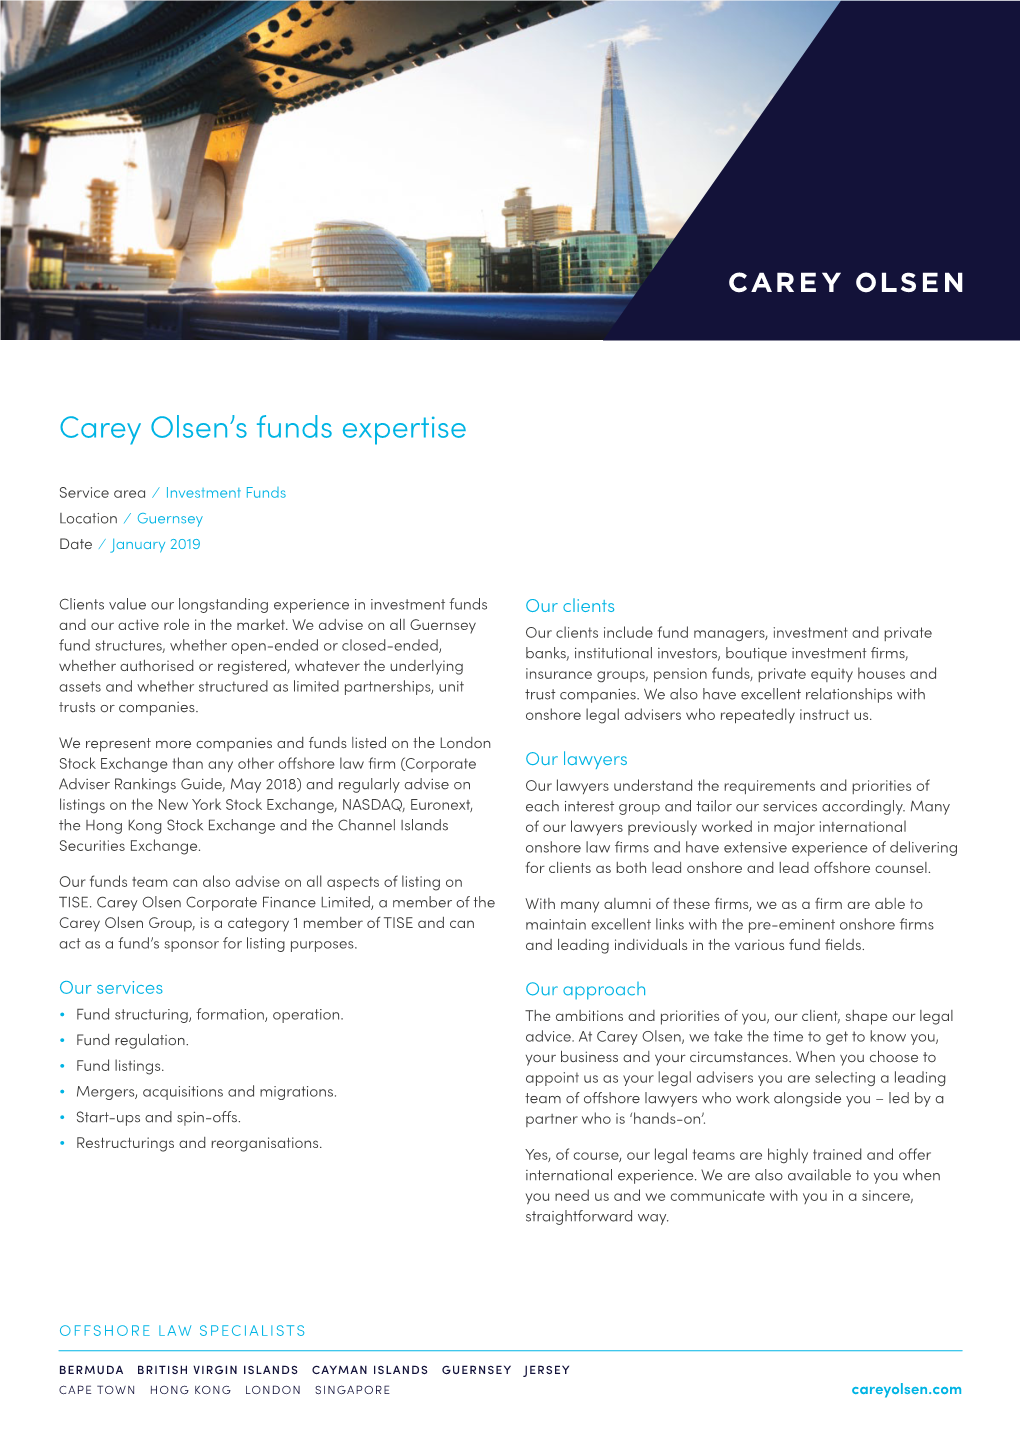 Carey Olsen's Funds Expertise